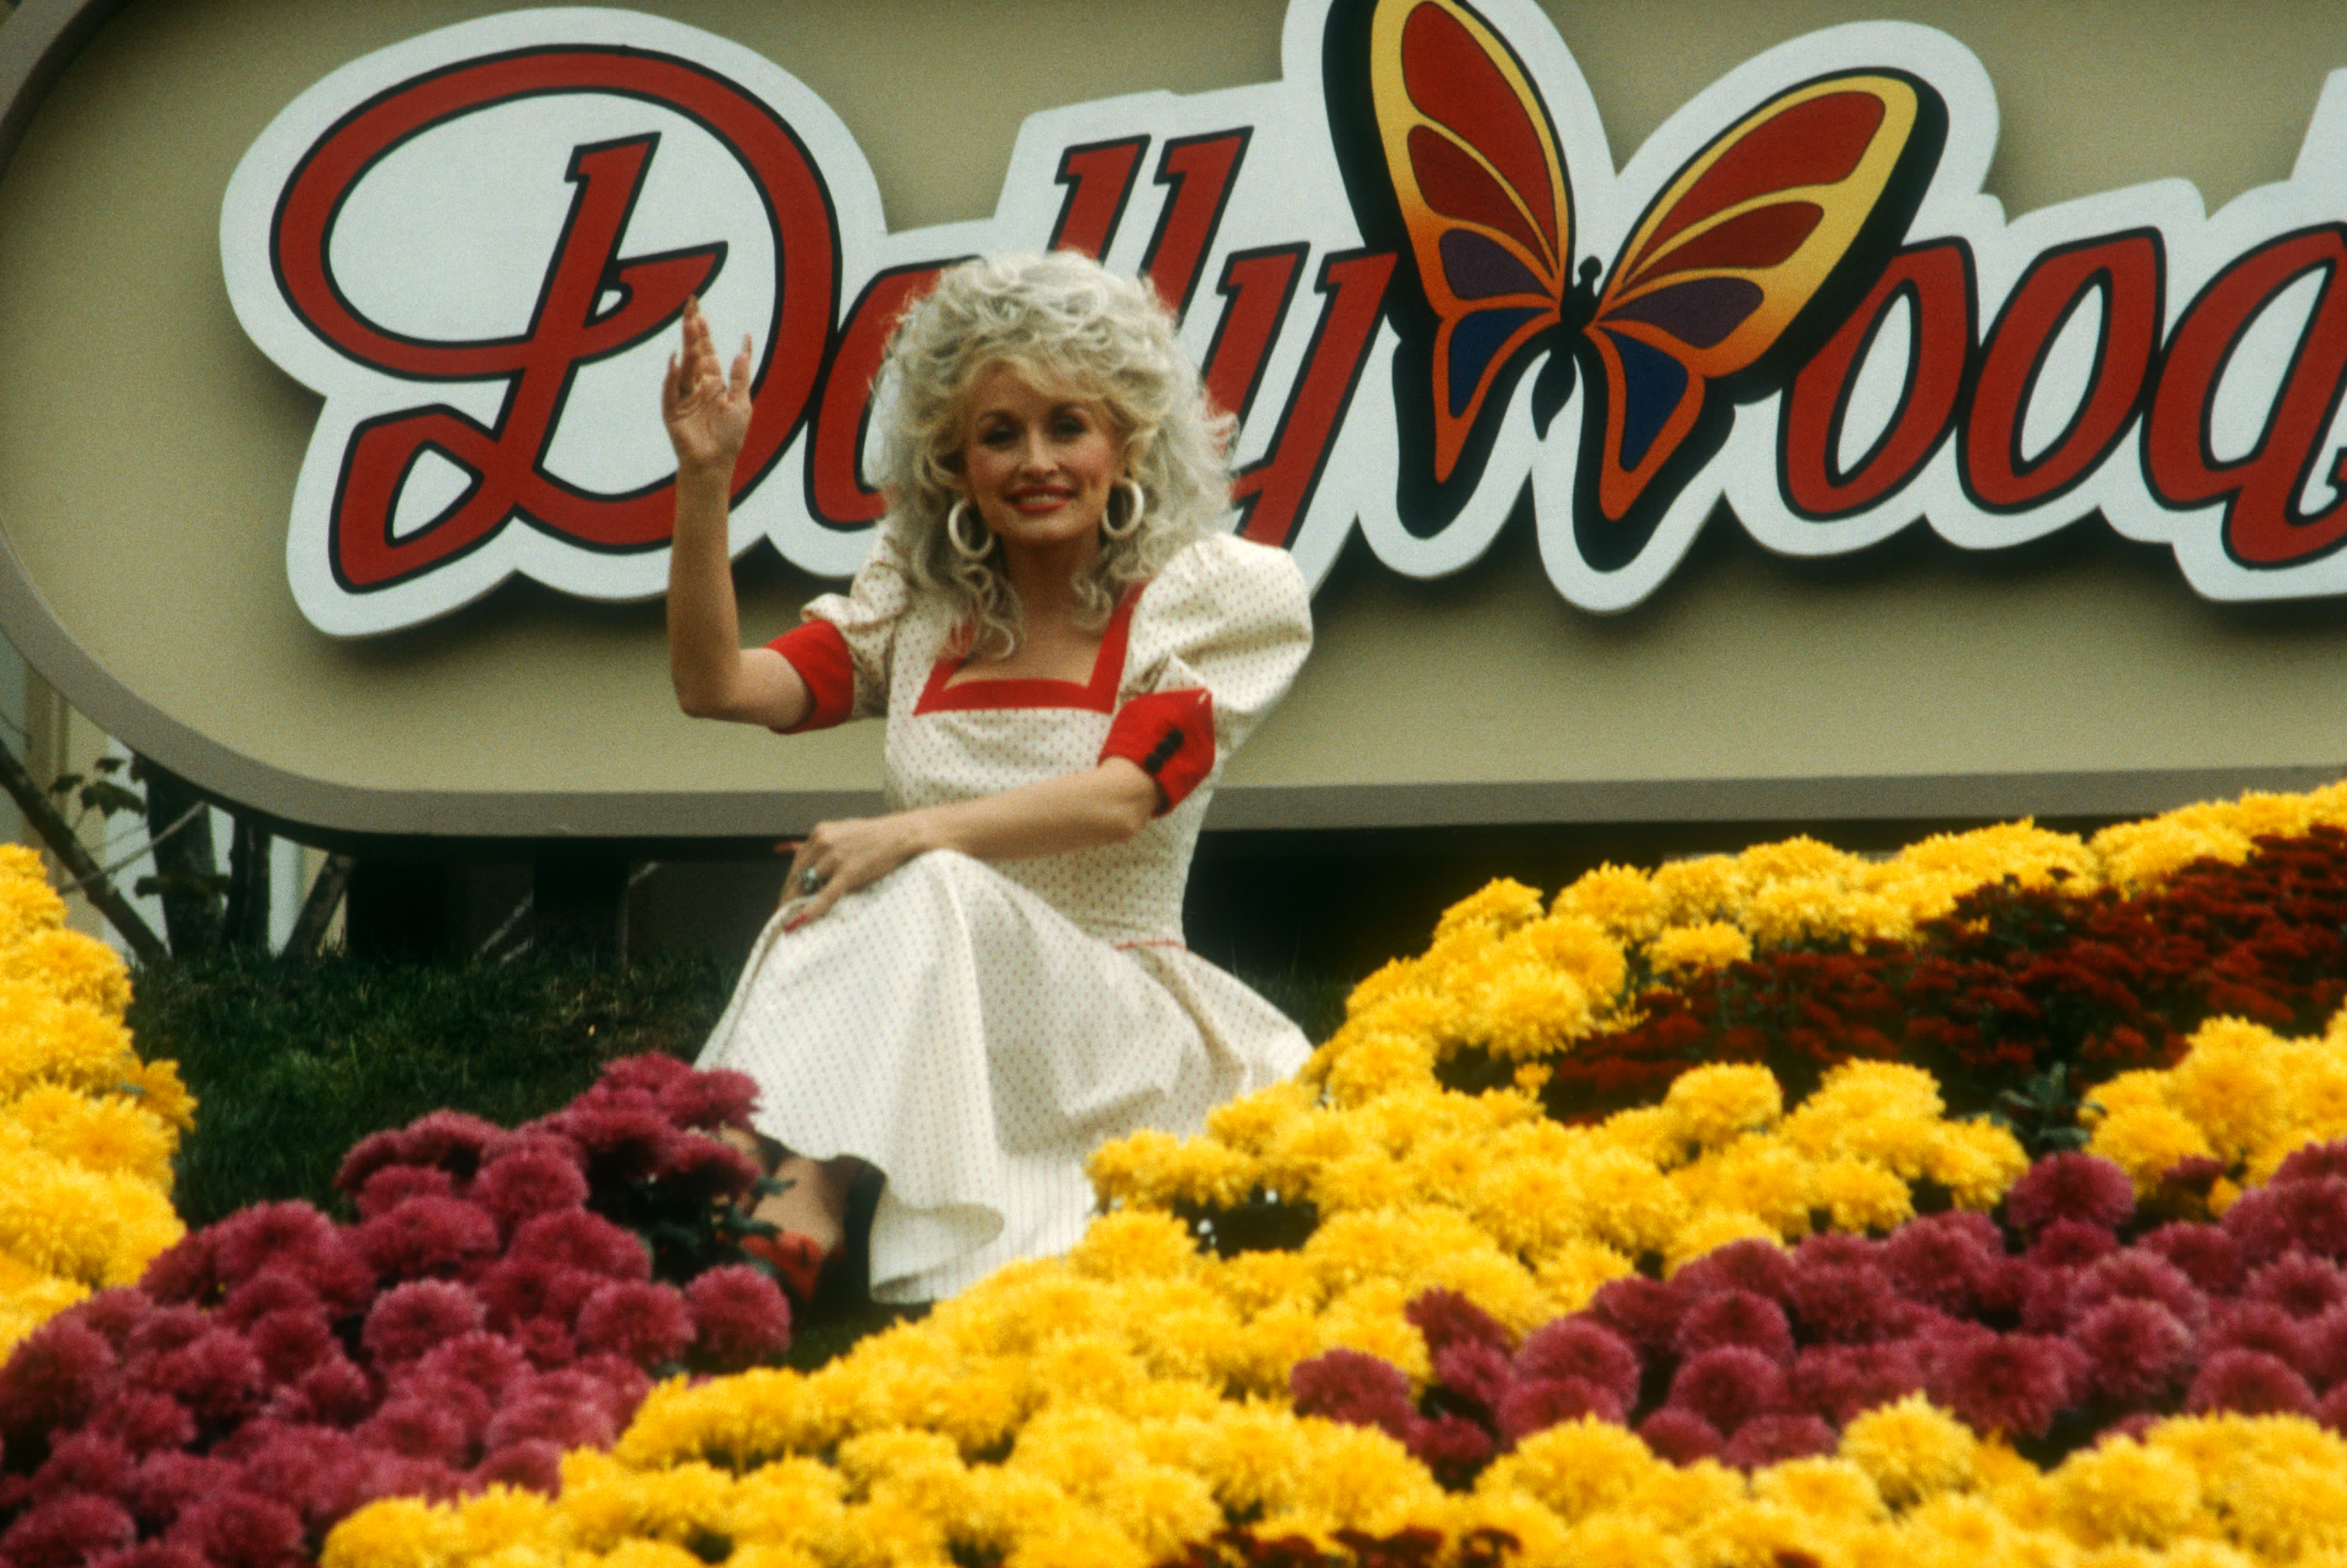 Photos: Dolly Parton's Dollywood theme park opened new Wildwood Grove3995 x 2669